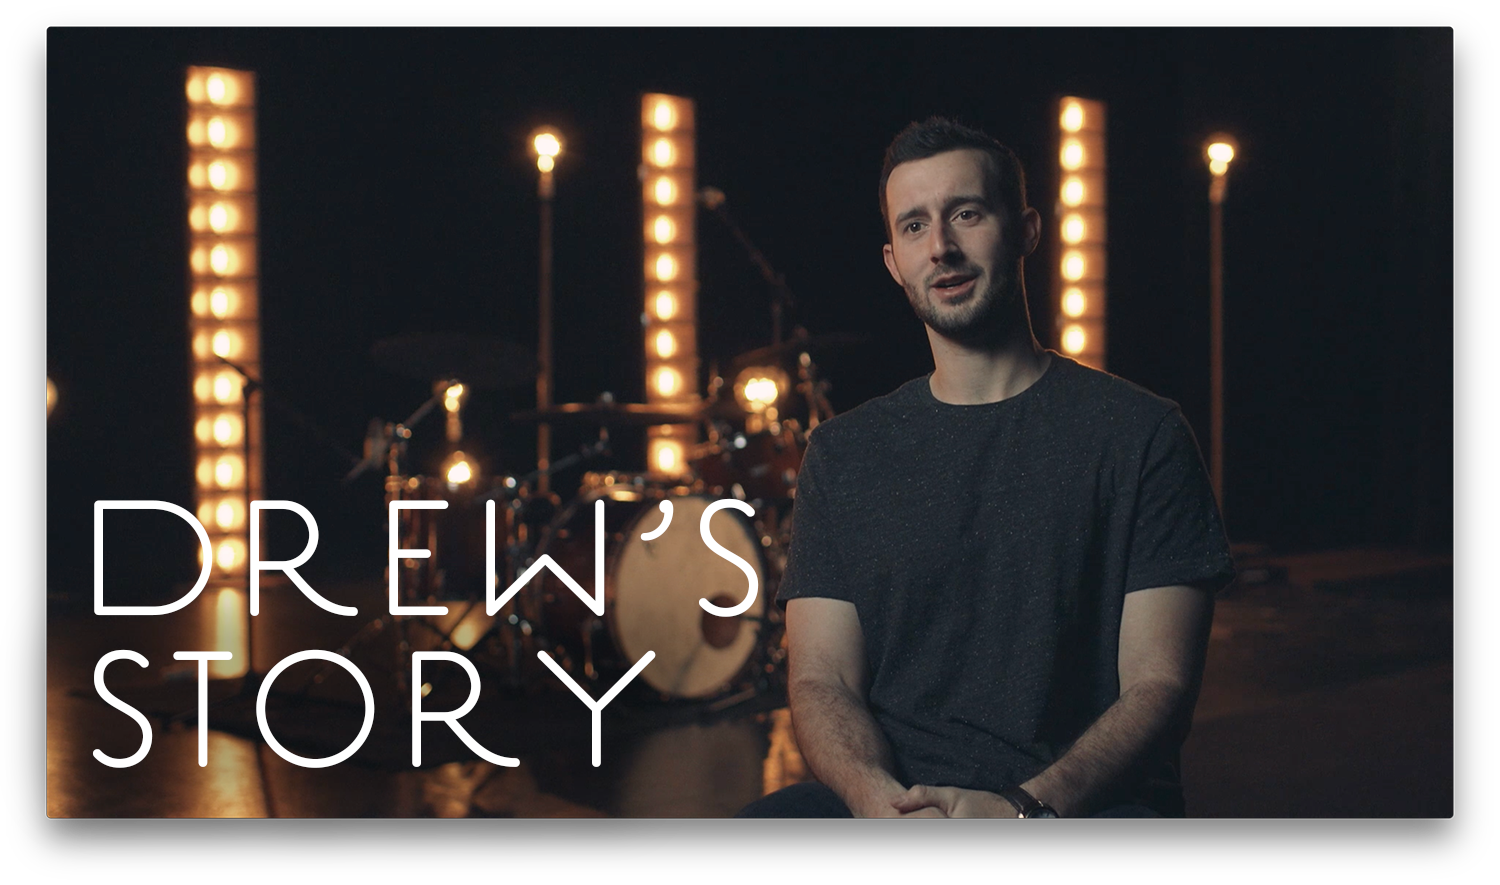 Drew's Story Video